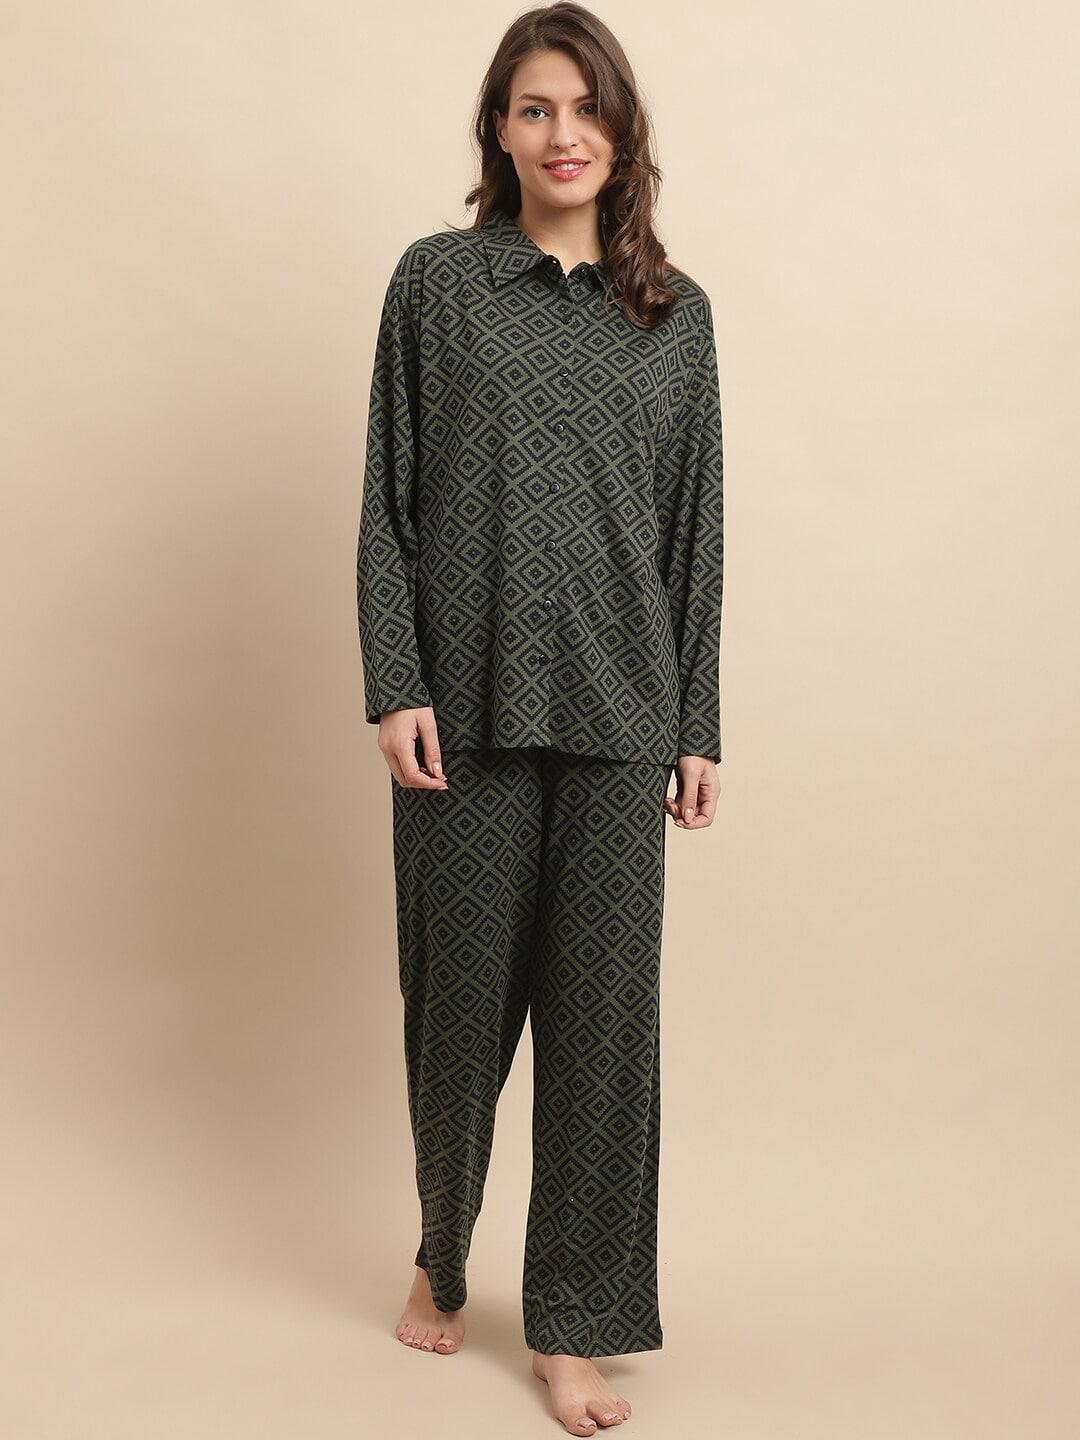 kanvin-green-&-black-geometric-printed-modal-shirt-&-pyjamas